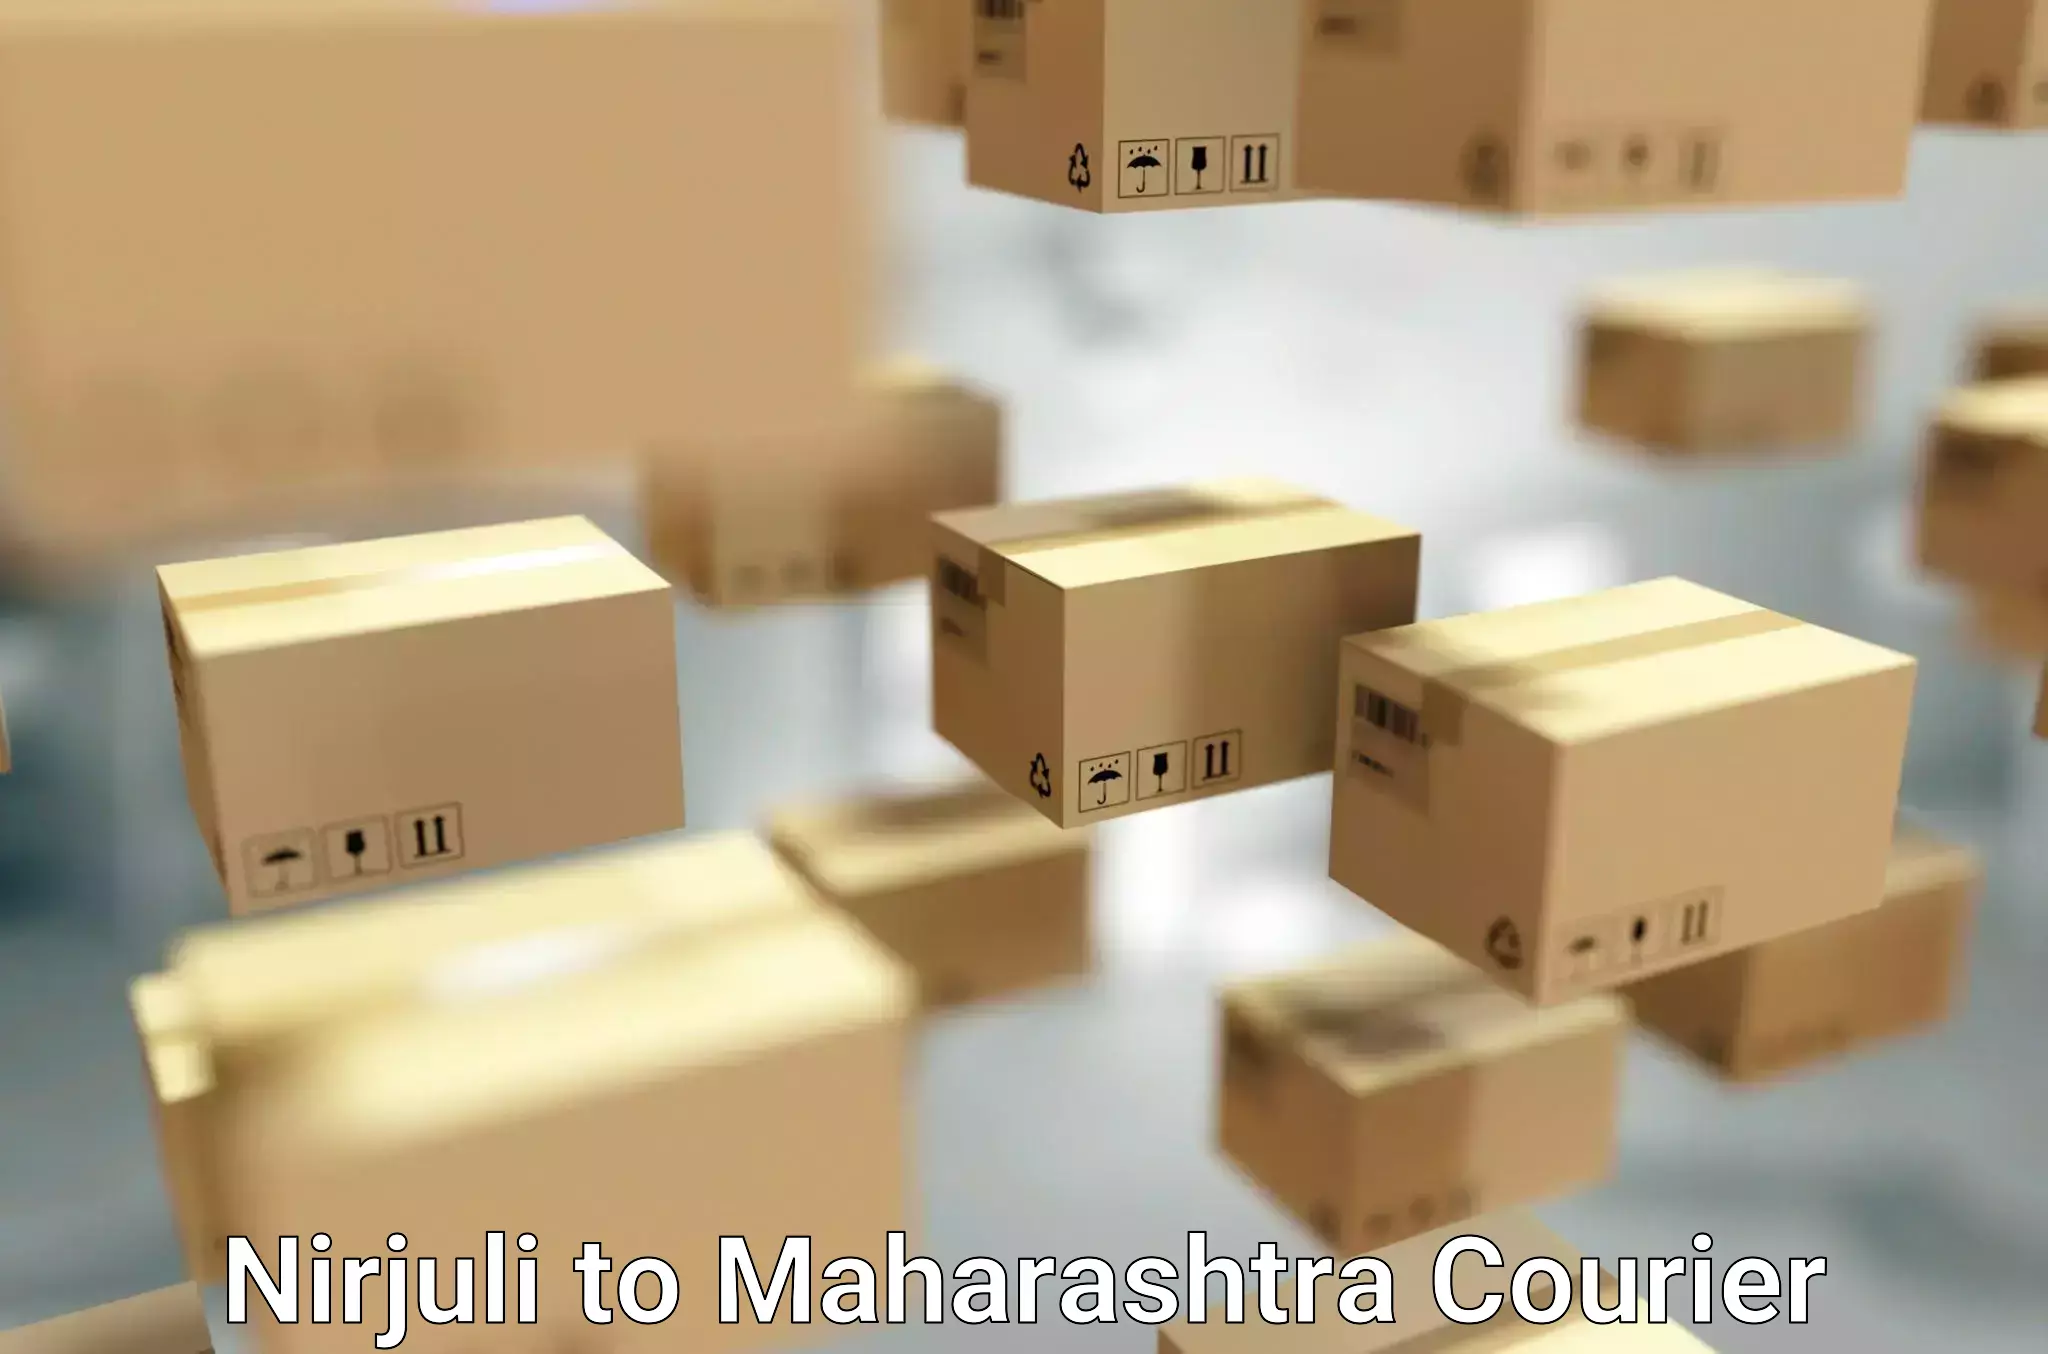 Trusted relocation experts Nirjuli to Maharashtra